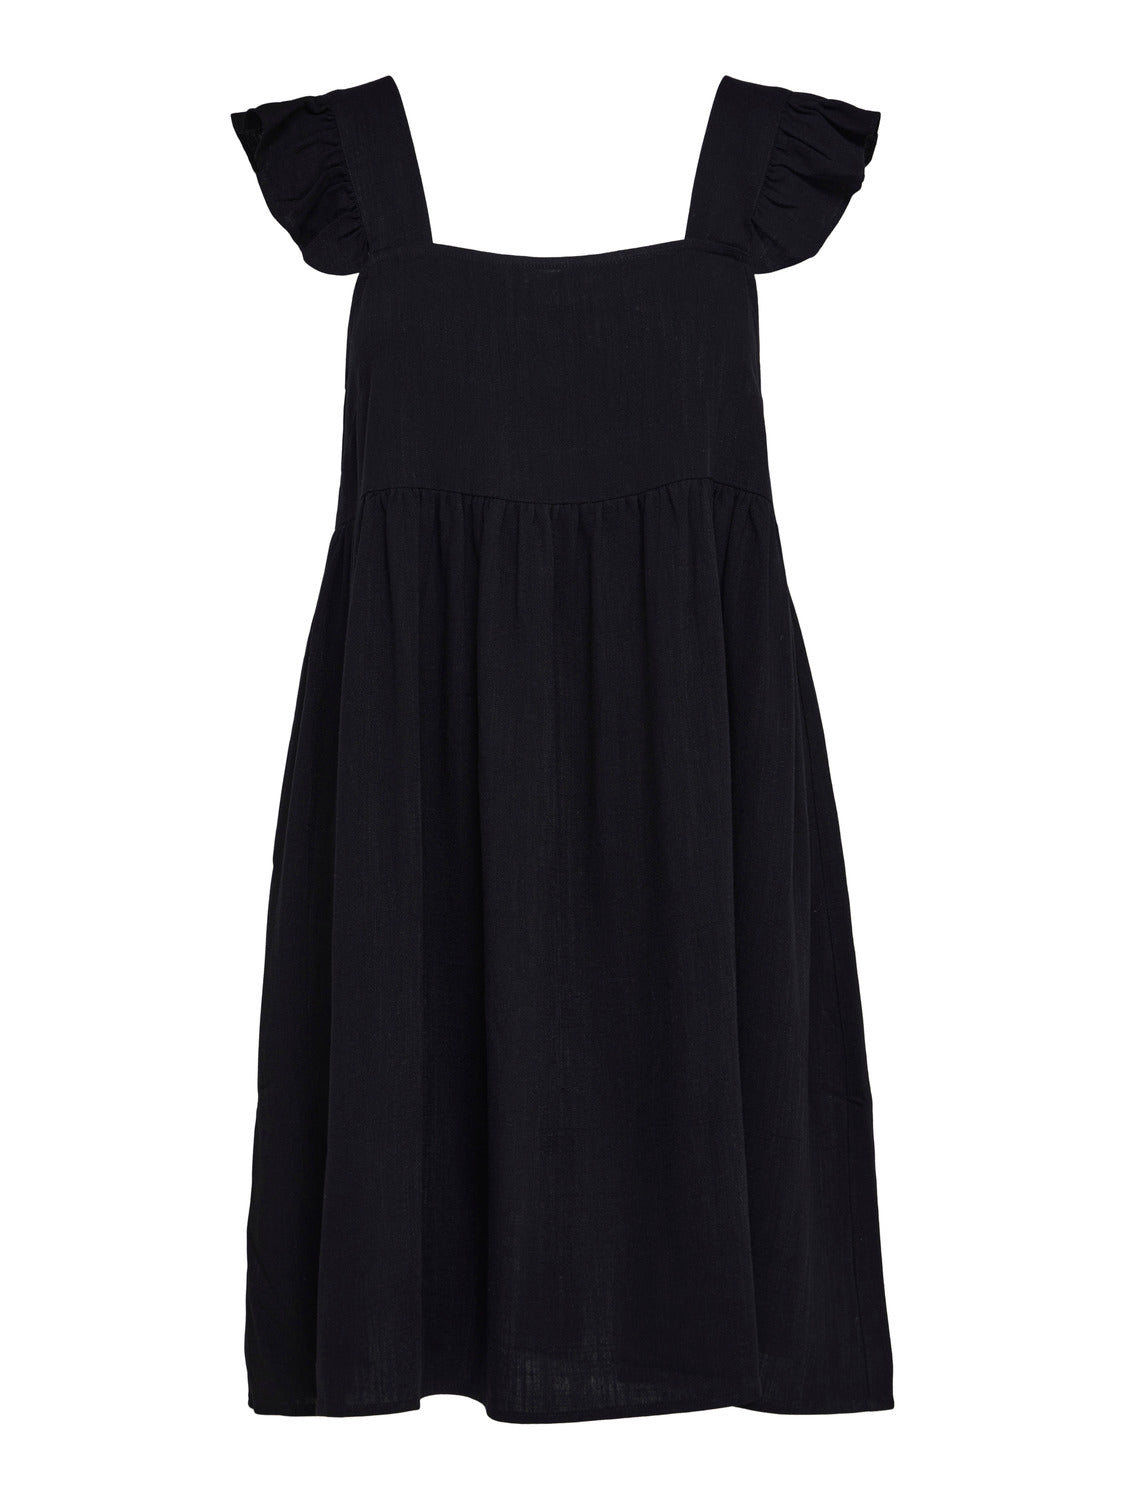 SLFIDA Dress - Black